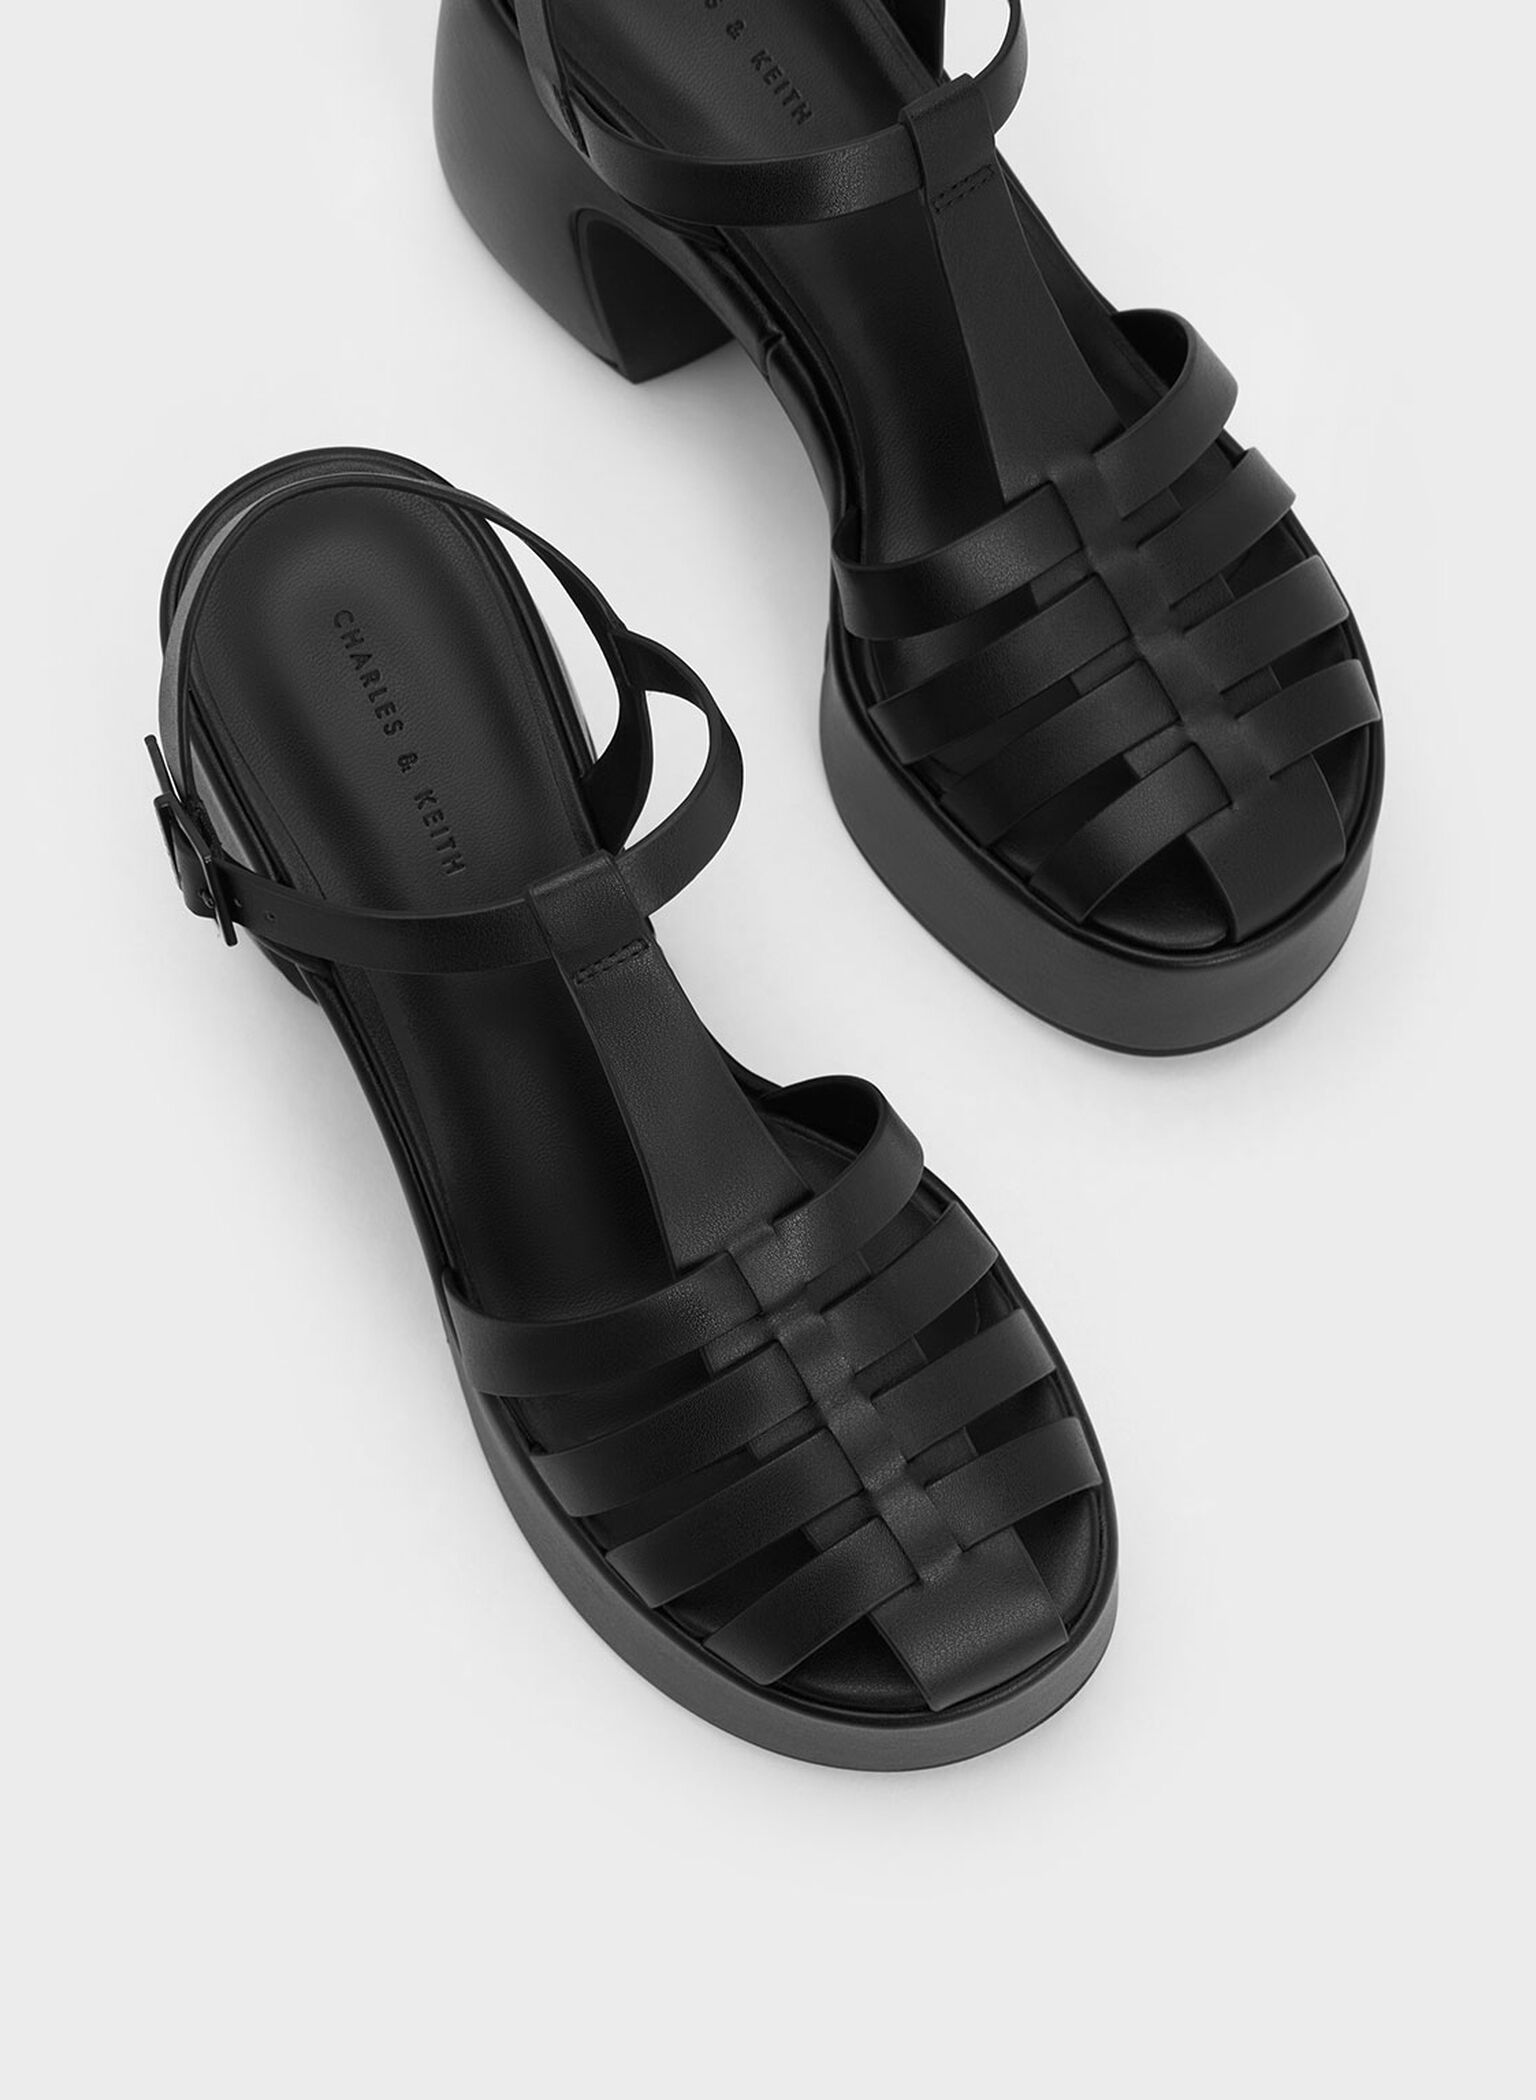 Interwoven Platform Gladiator Sandals, Black, hi-res